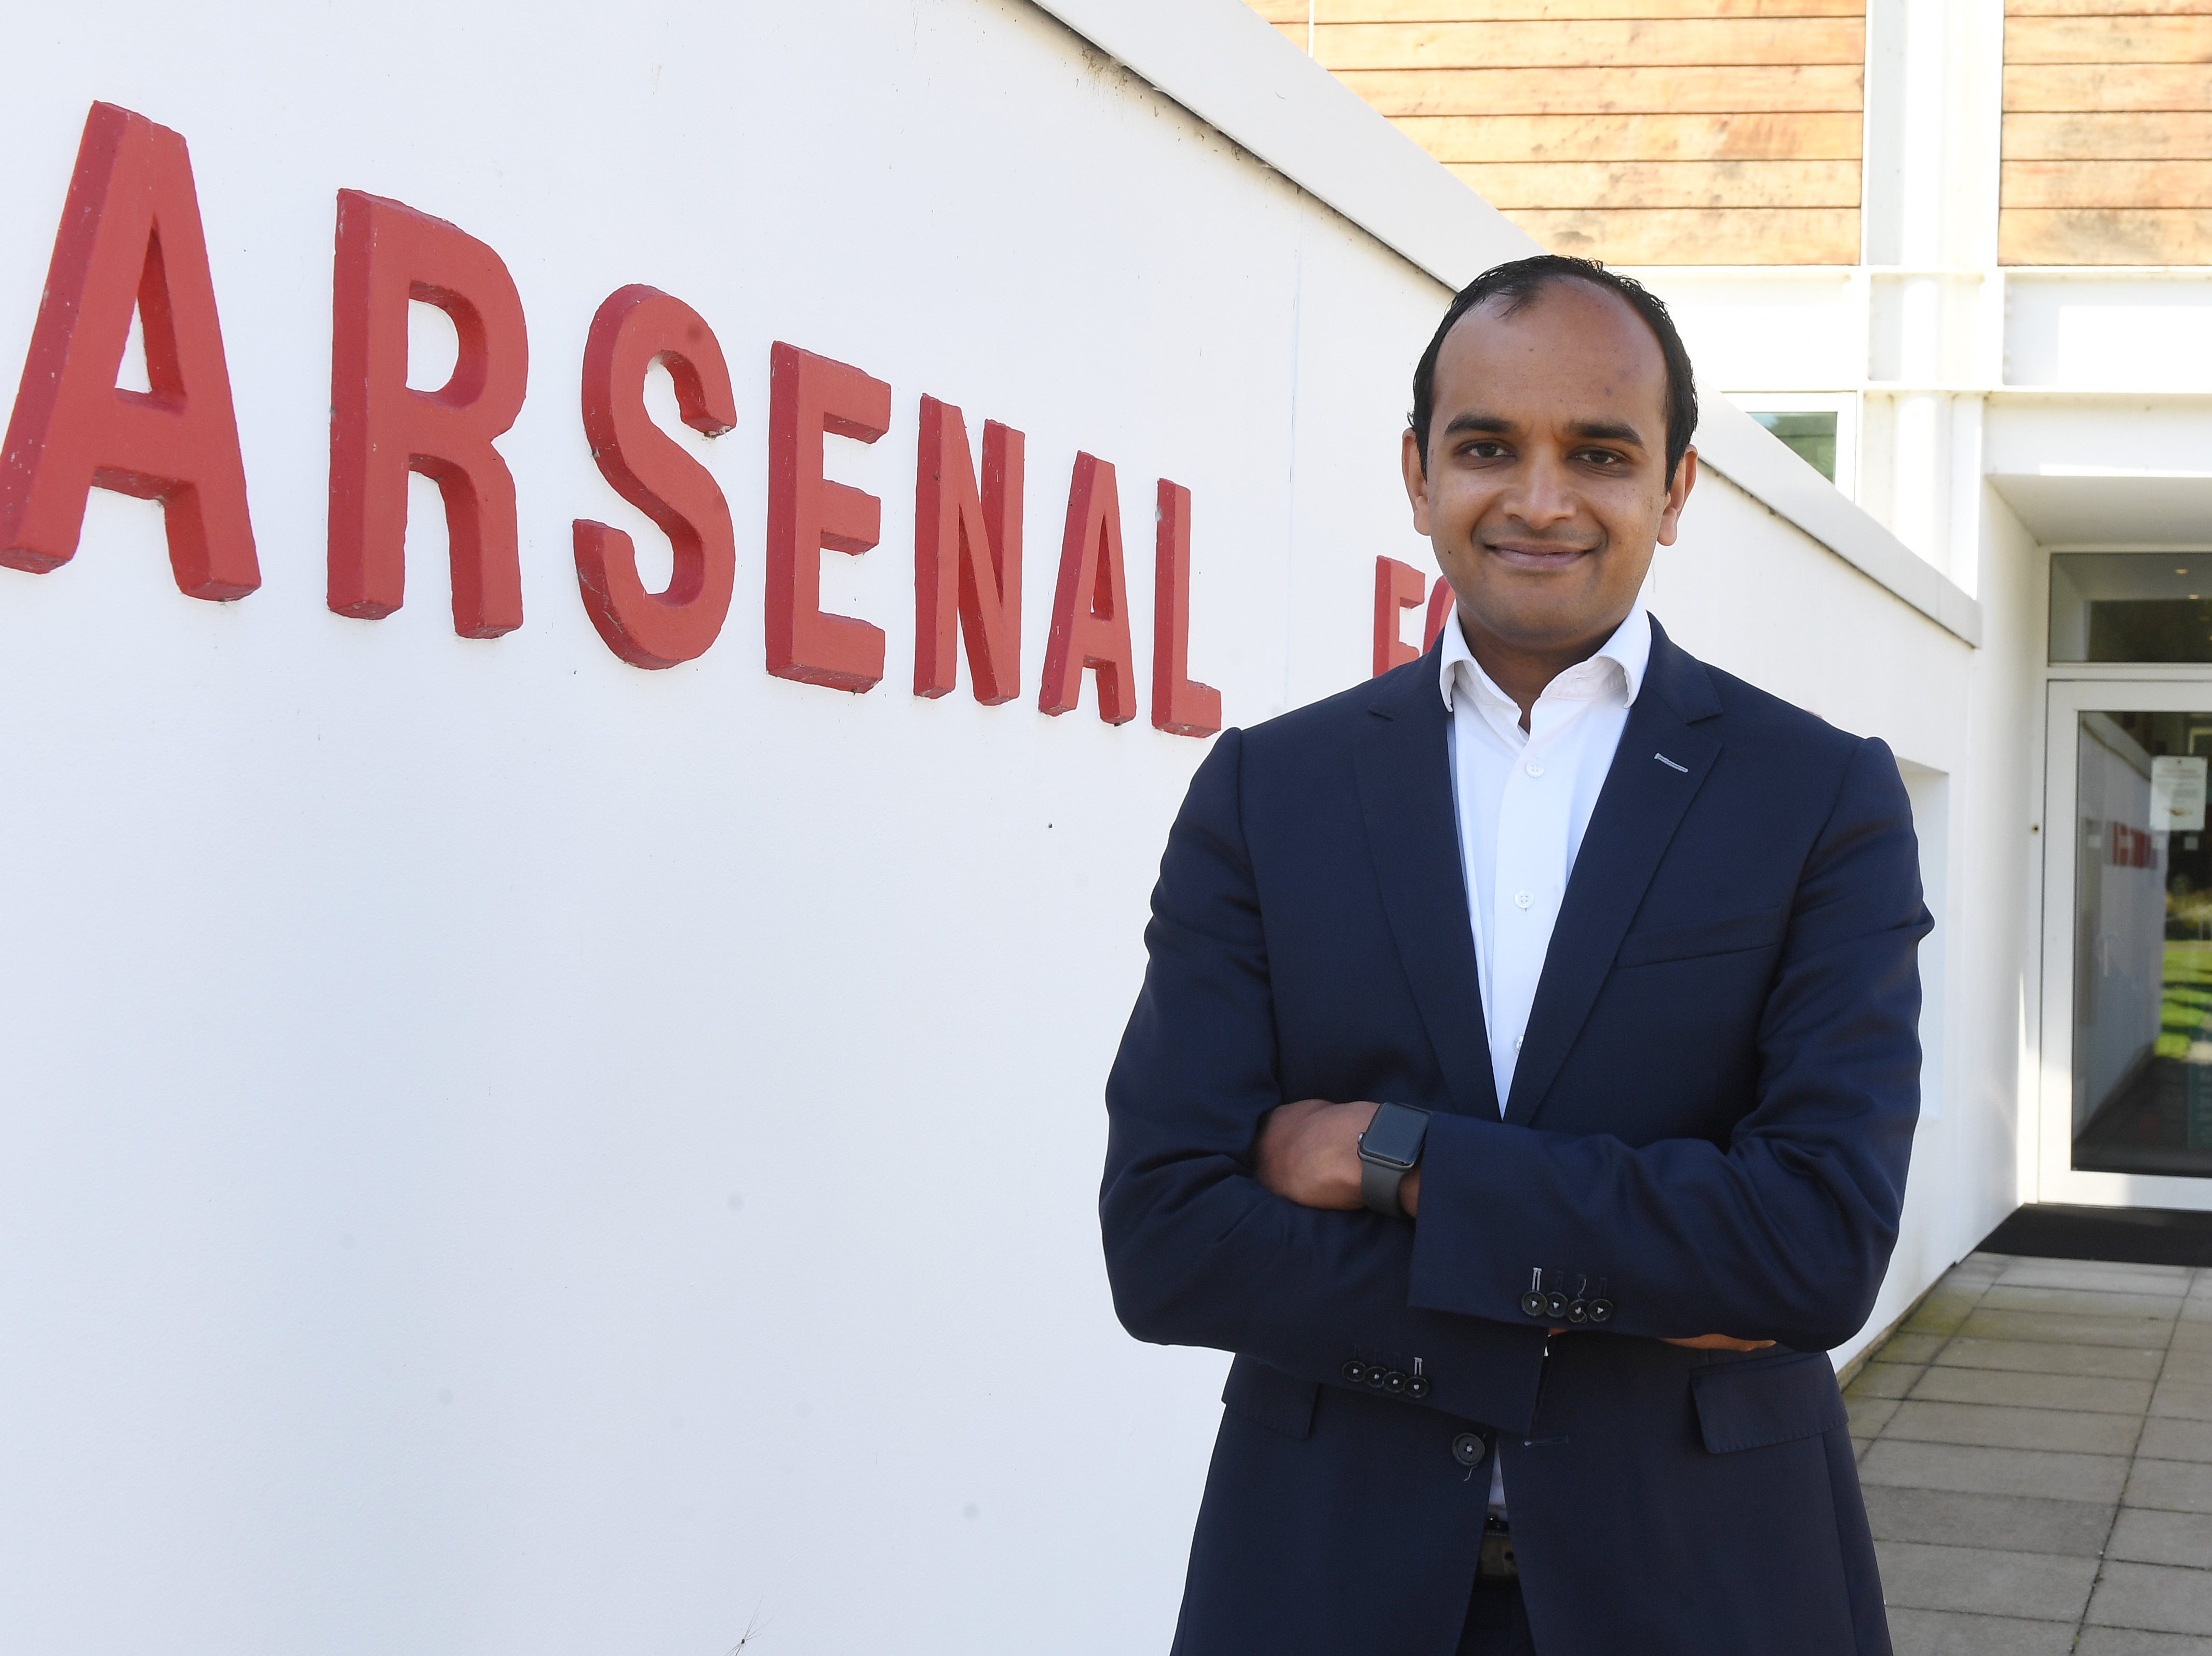 Arsenal chief executive Vinai Venkatesham